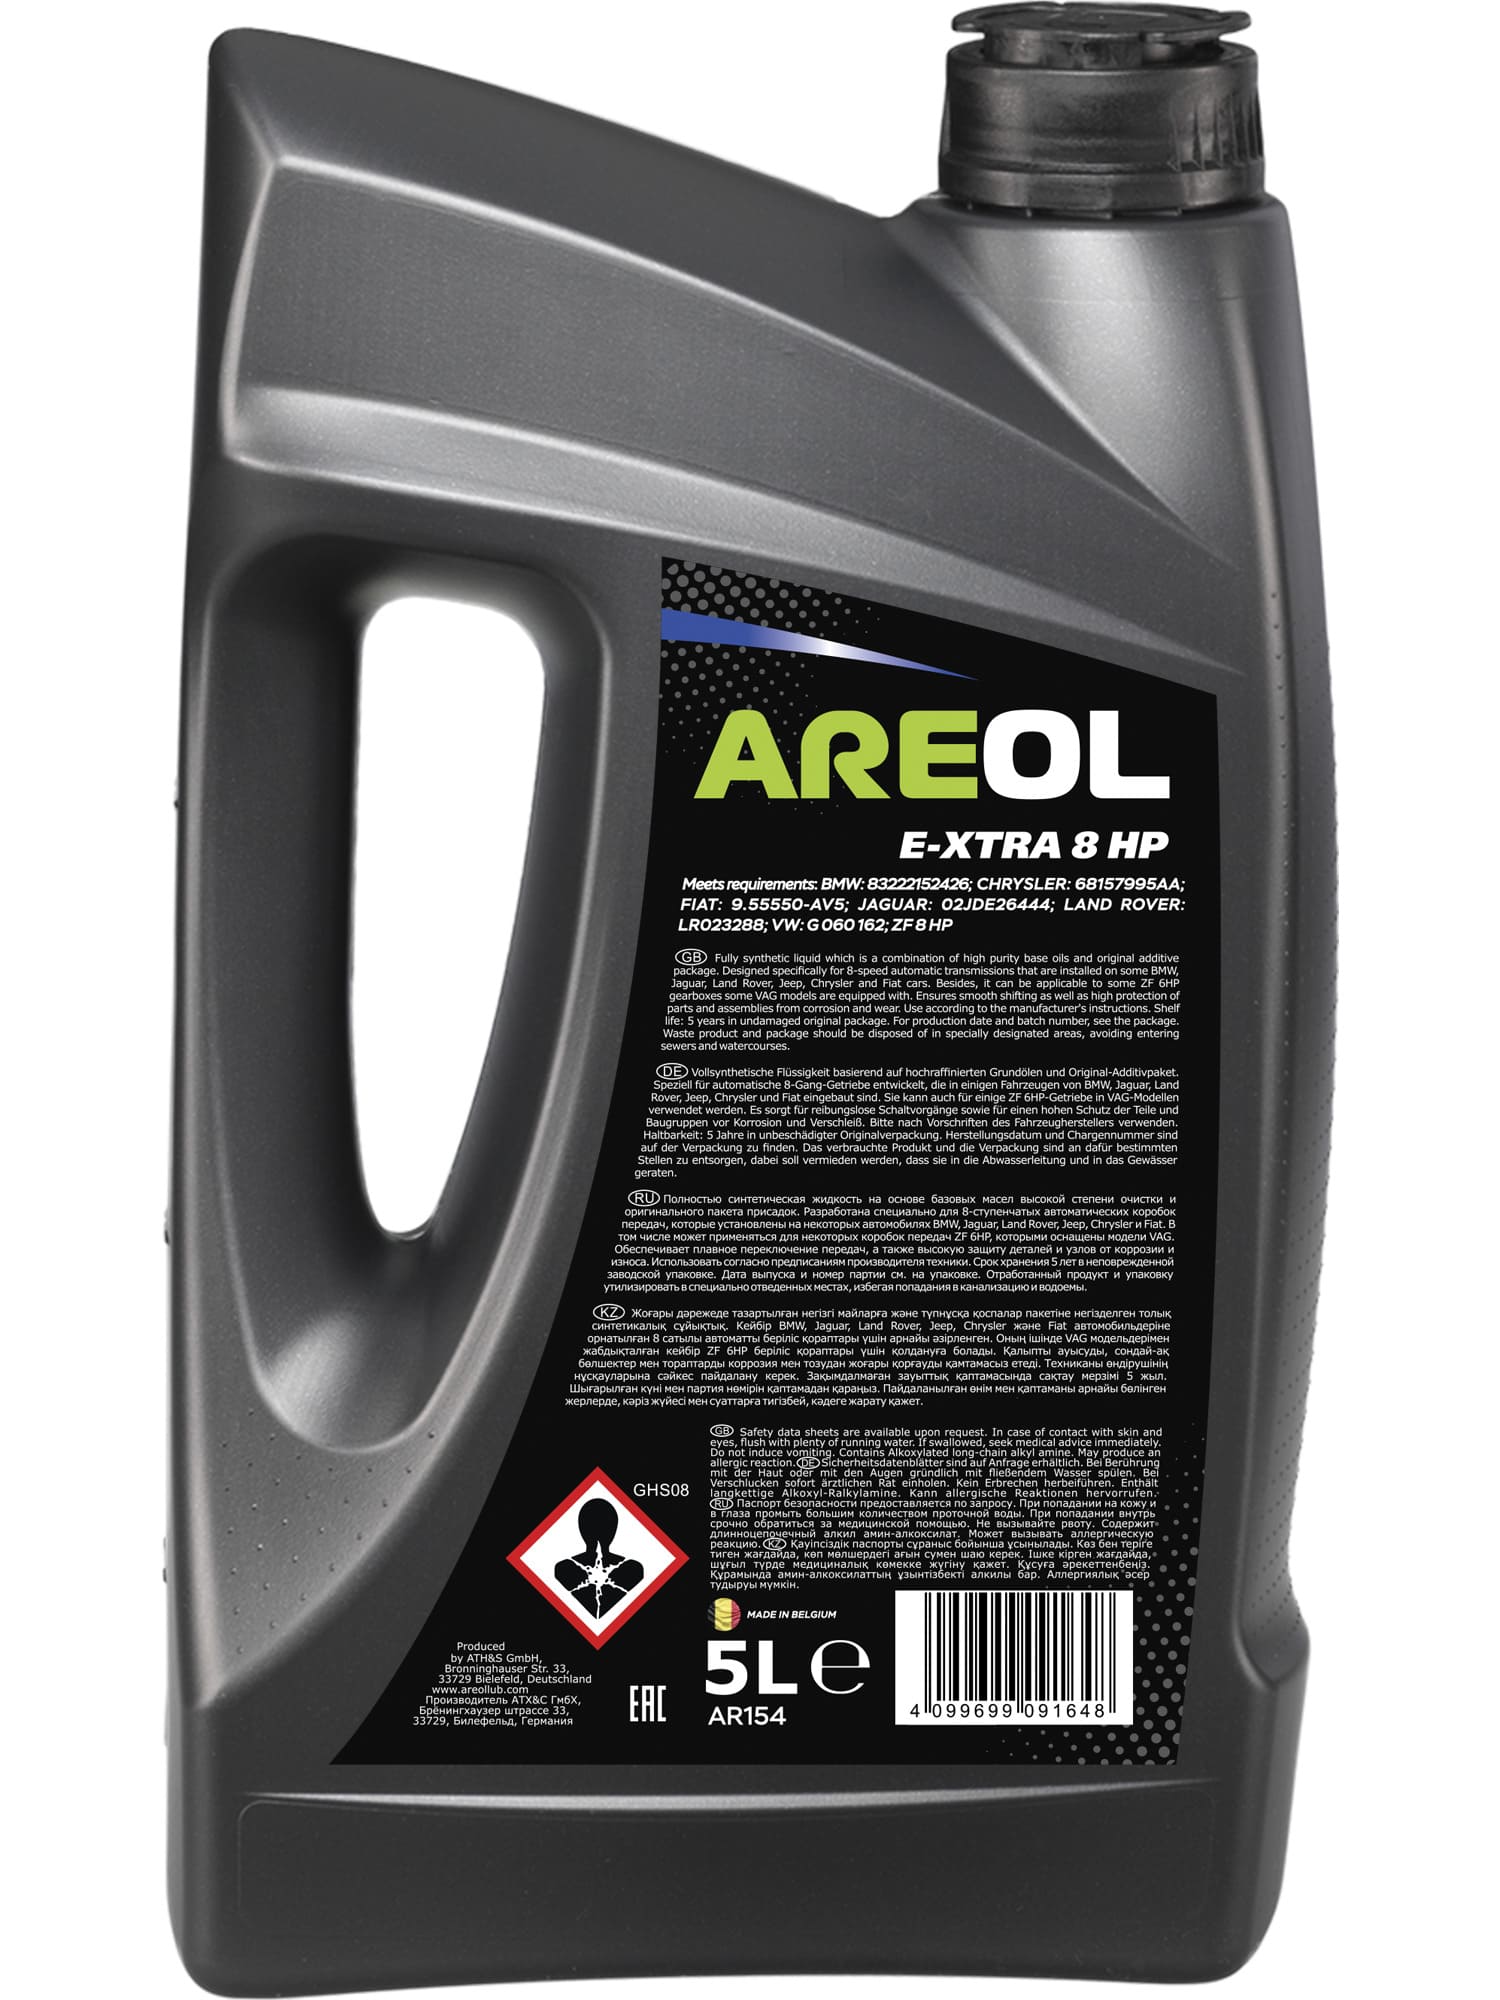 Gear Oil AREOL E-XTRA 8 HP 5L